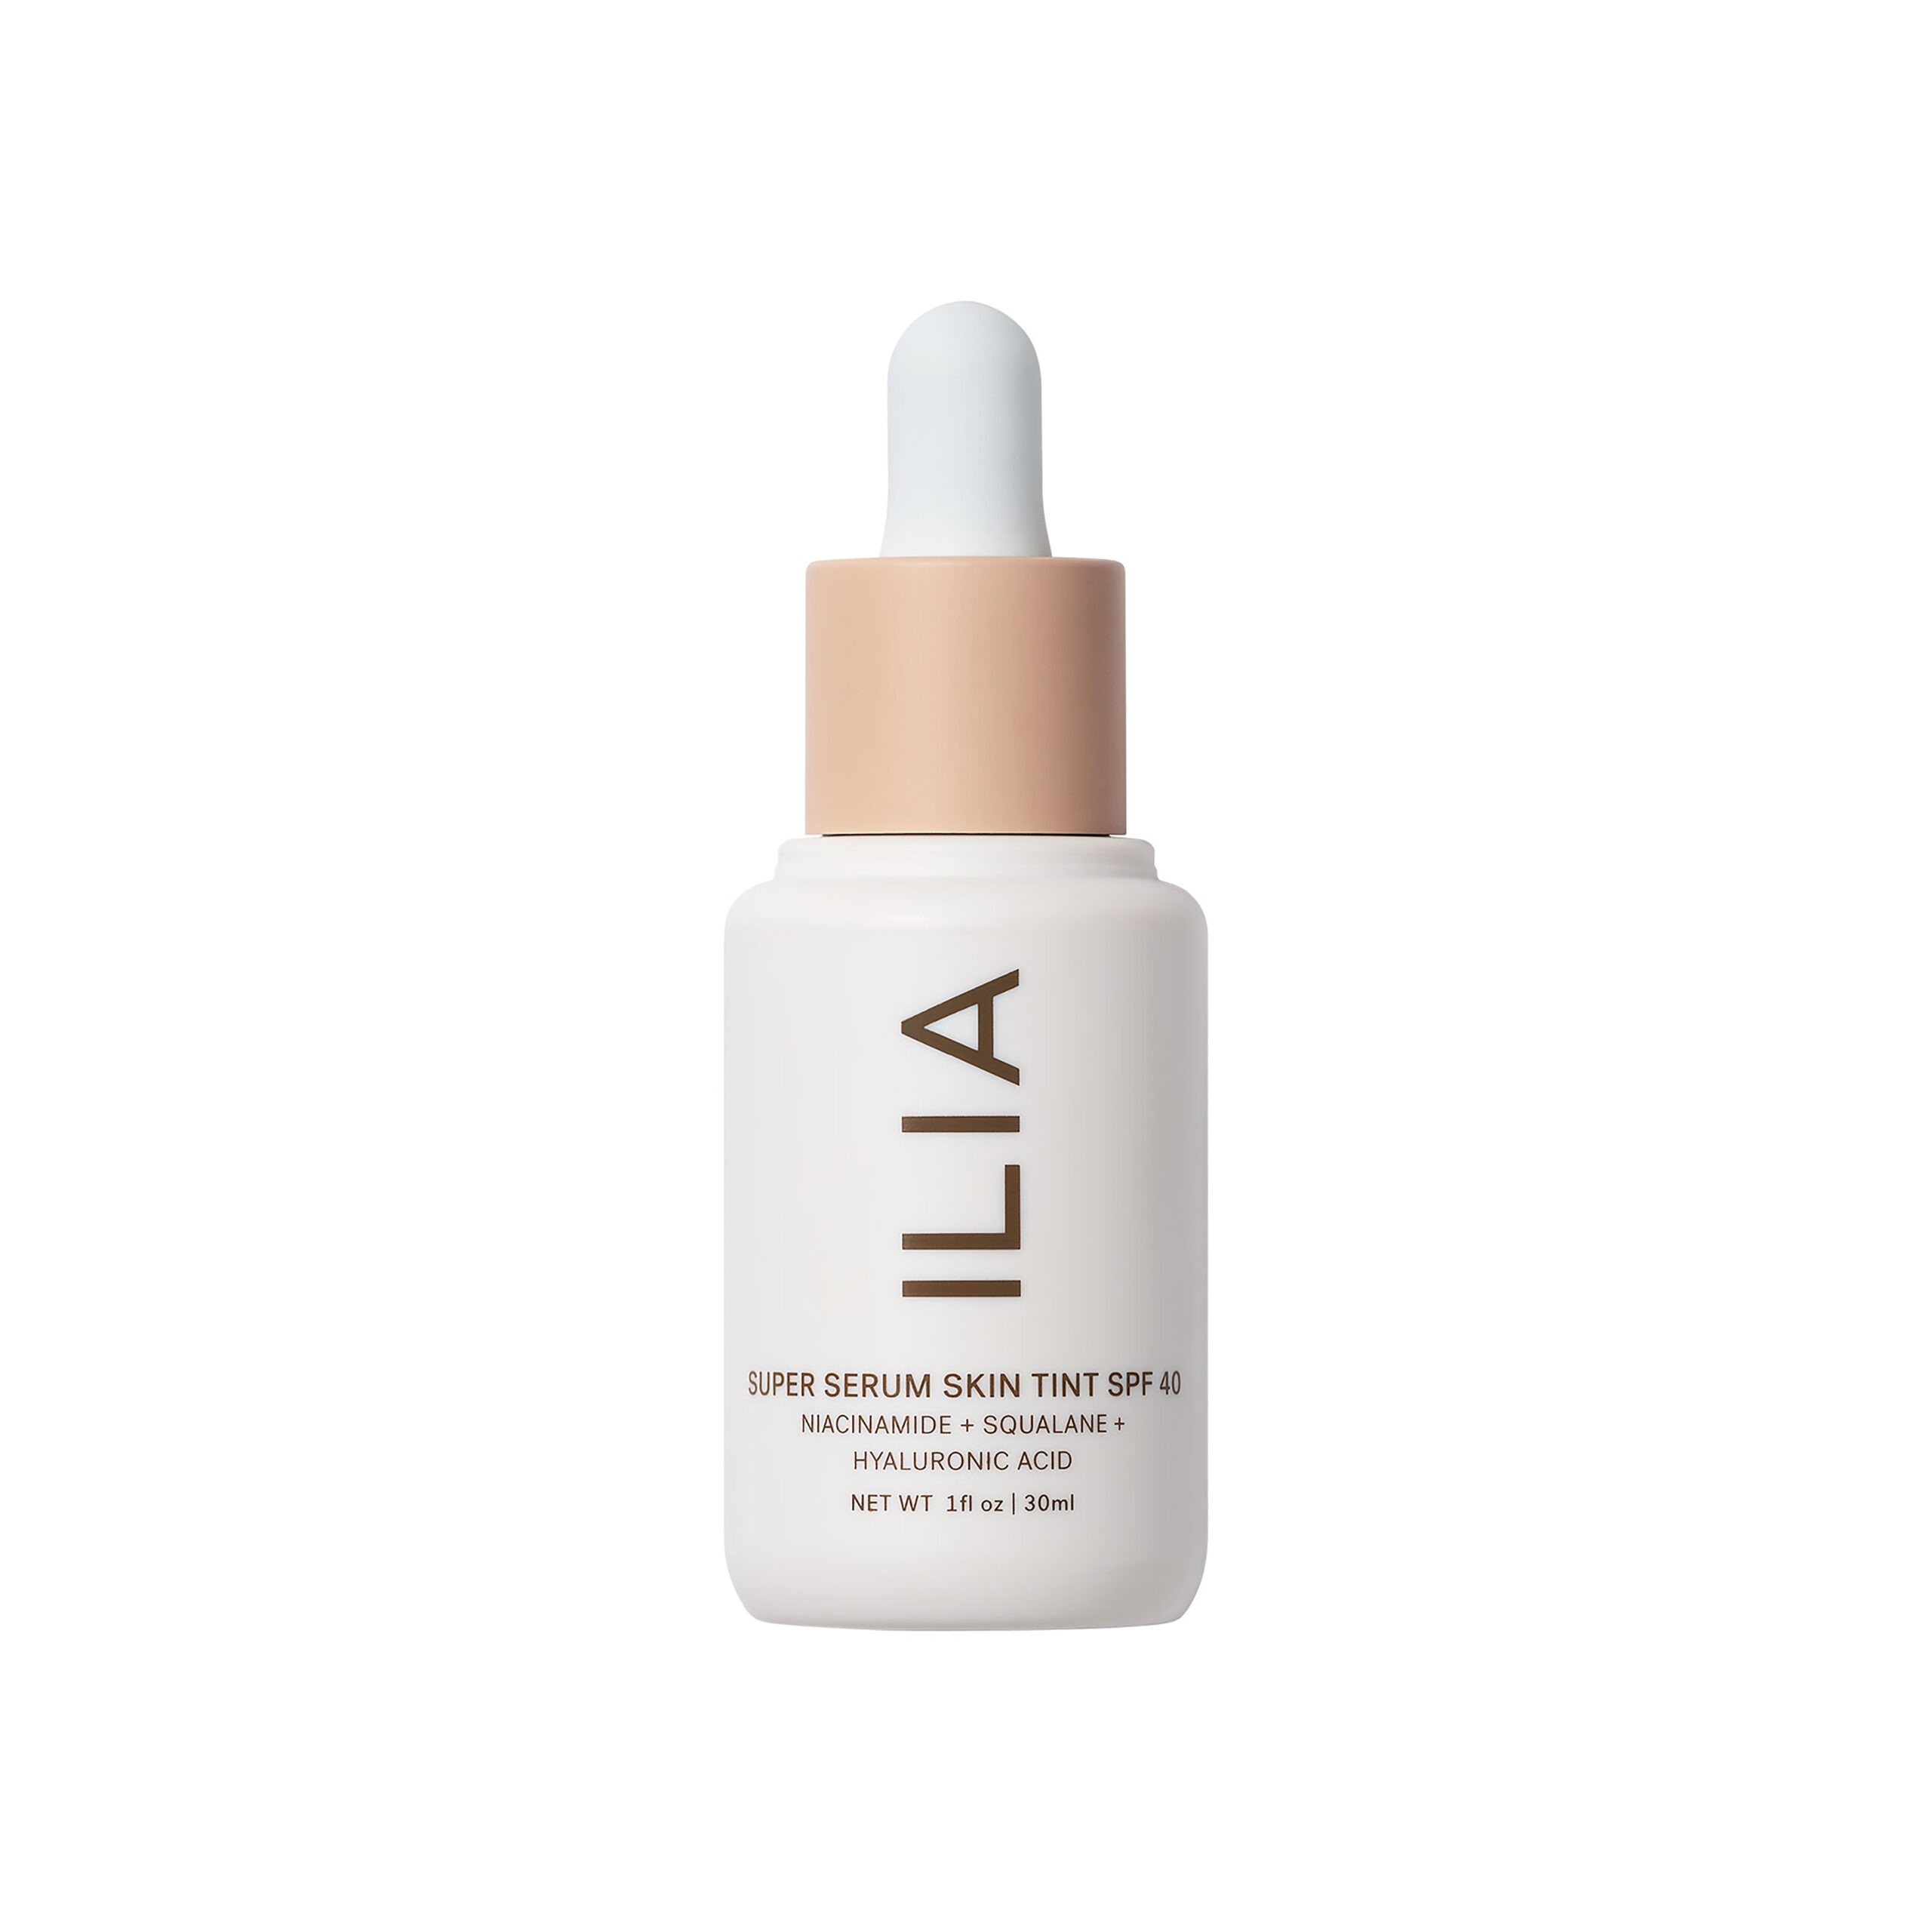 Bottle of Ilia Super Serum Skin Tint.